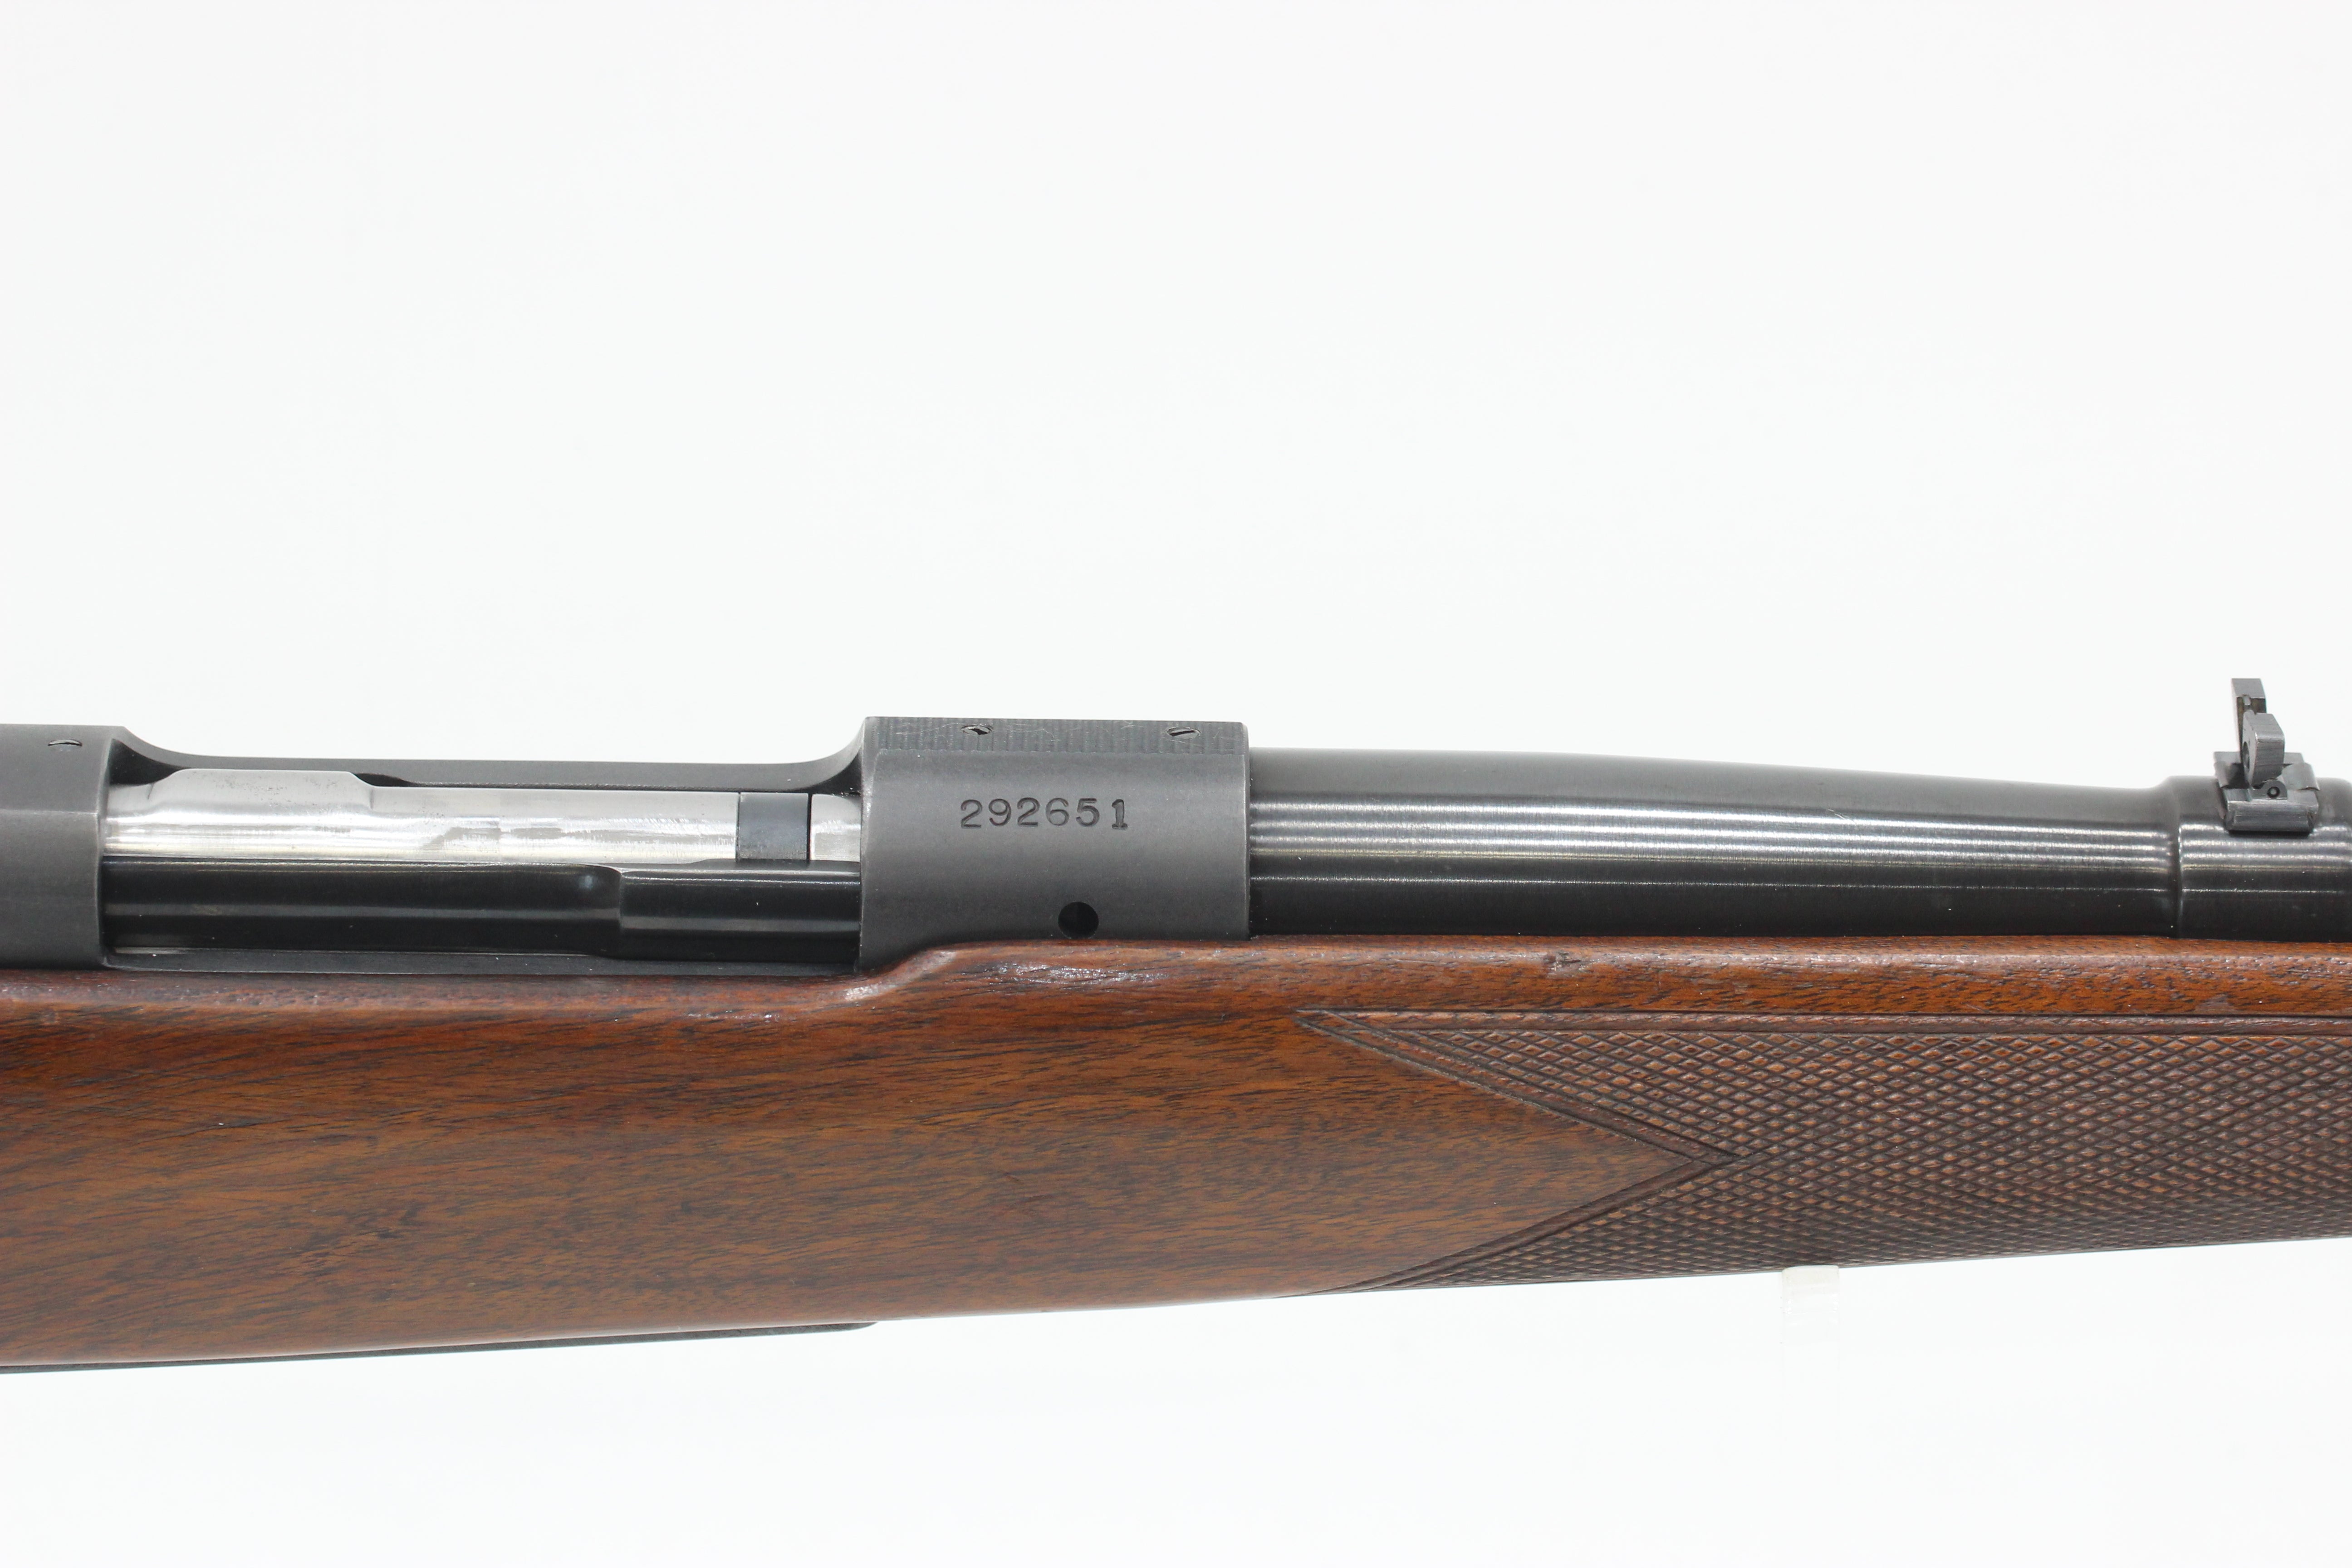 .270 Win. - Standard Rifle - 1954